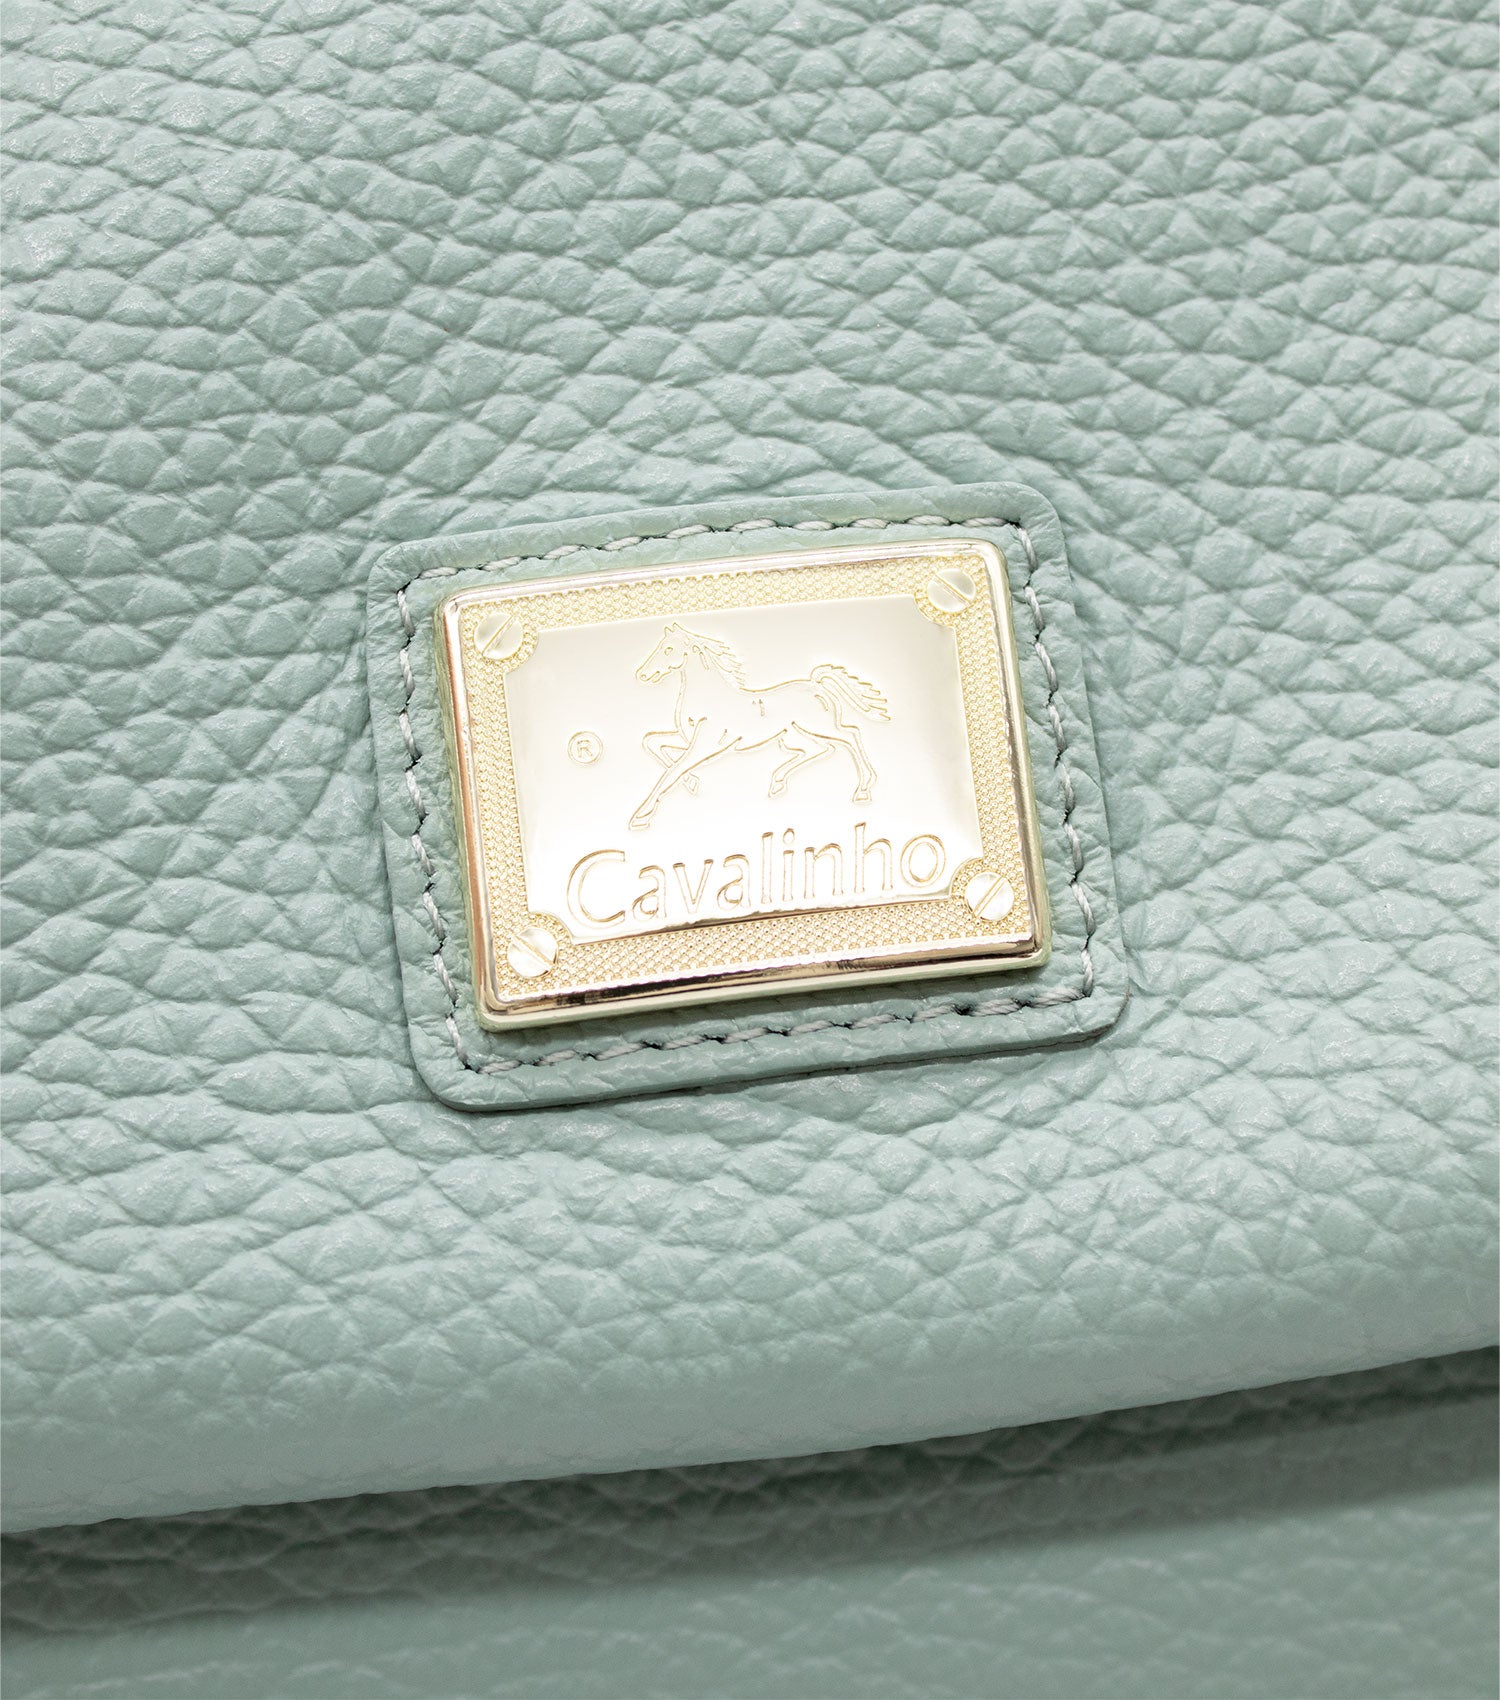 Cavalinho Muse 3 in 1: Leather Clutch, Handbag or Crossbody Bag - SKU 18300509.09.99. | #color_DarkSeaGreen